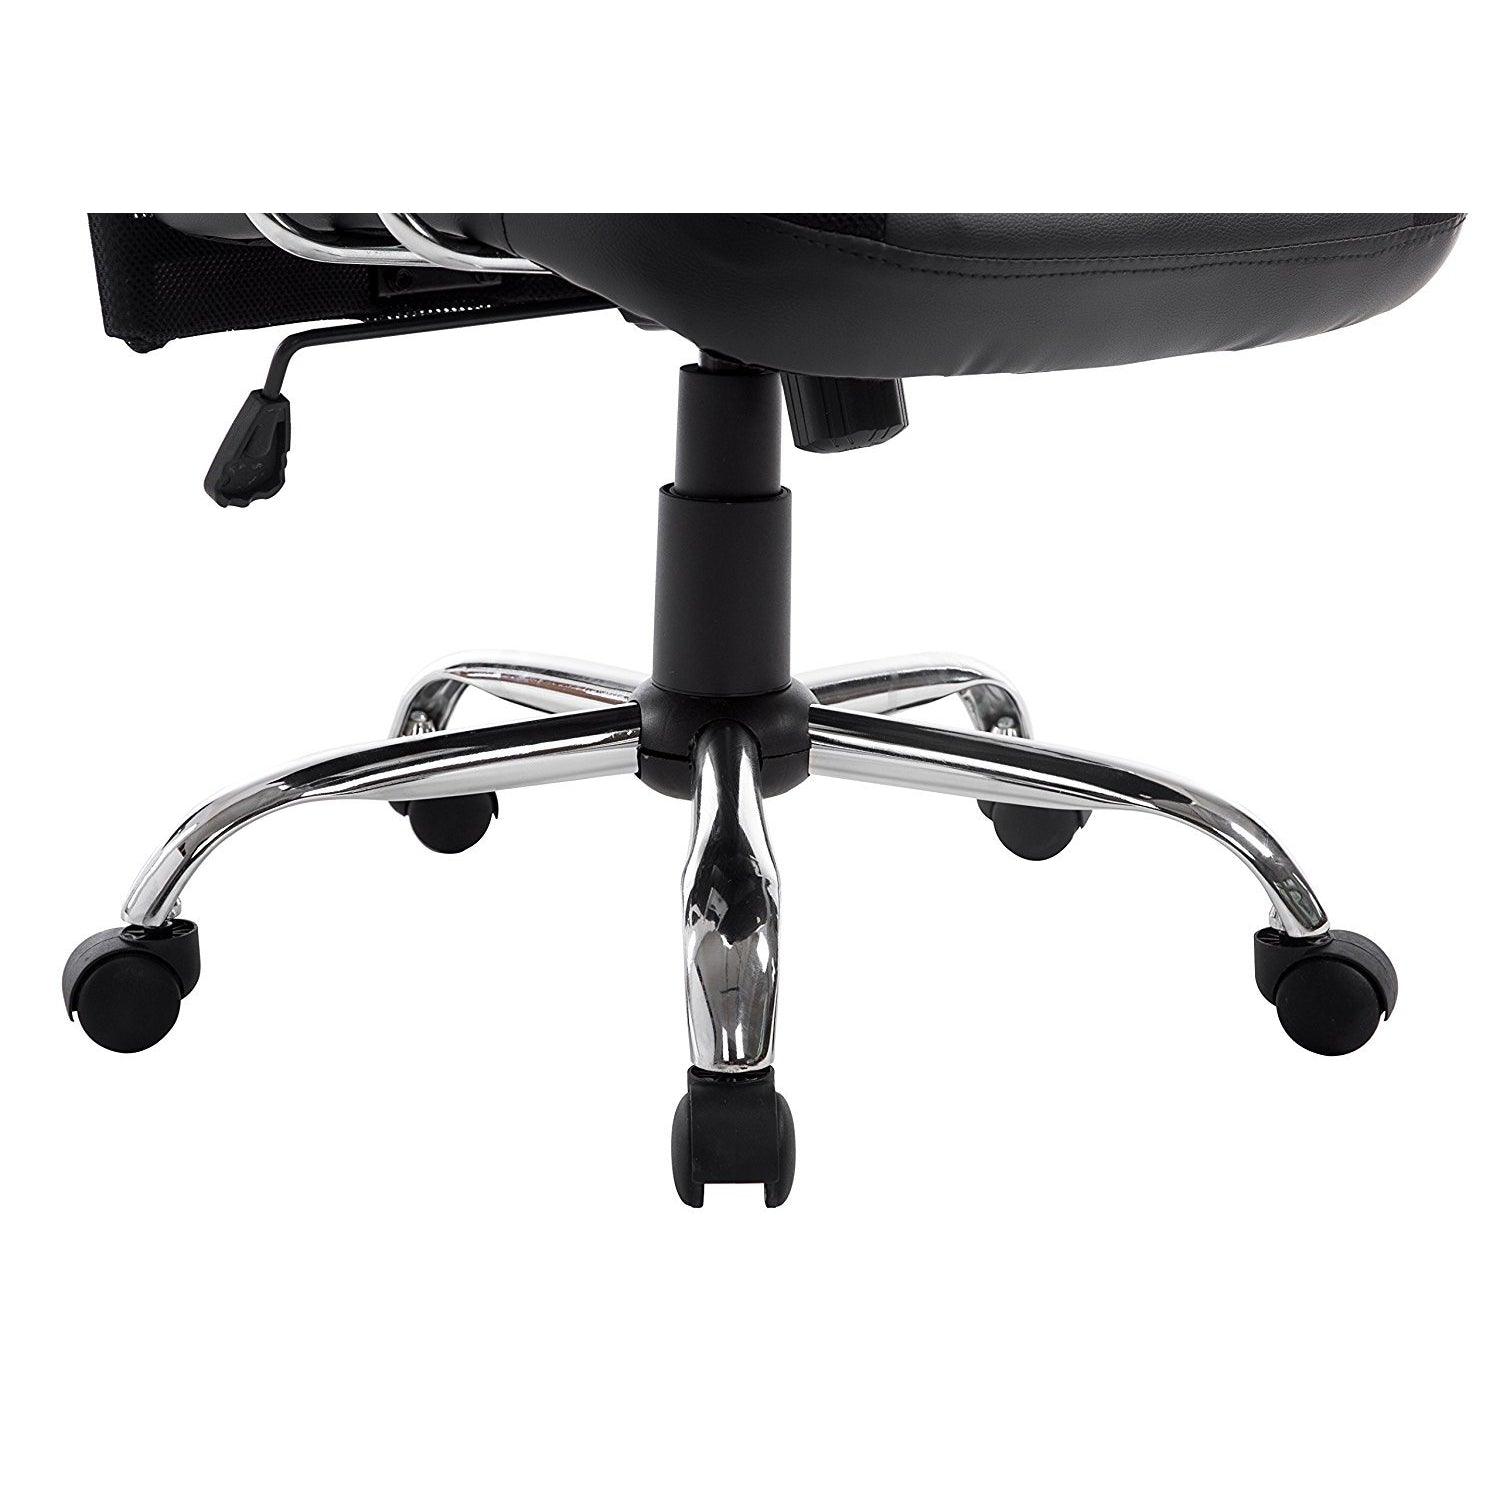 Sleek Design High Back Mesh Fabric Swivel Office Chair with Chrome Base, MO57 Black